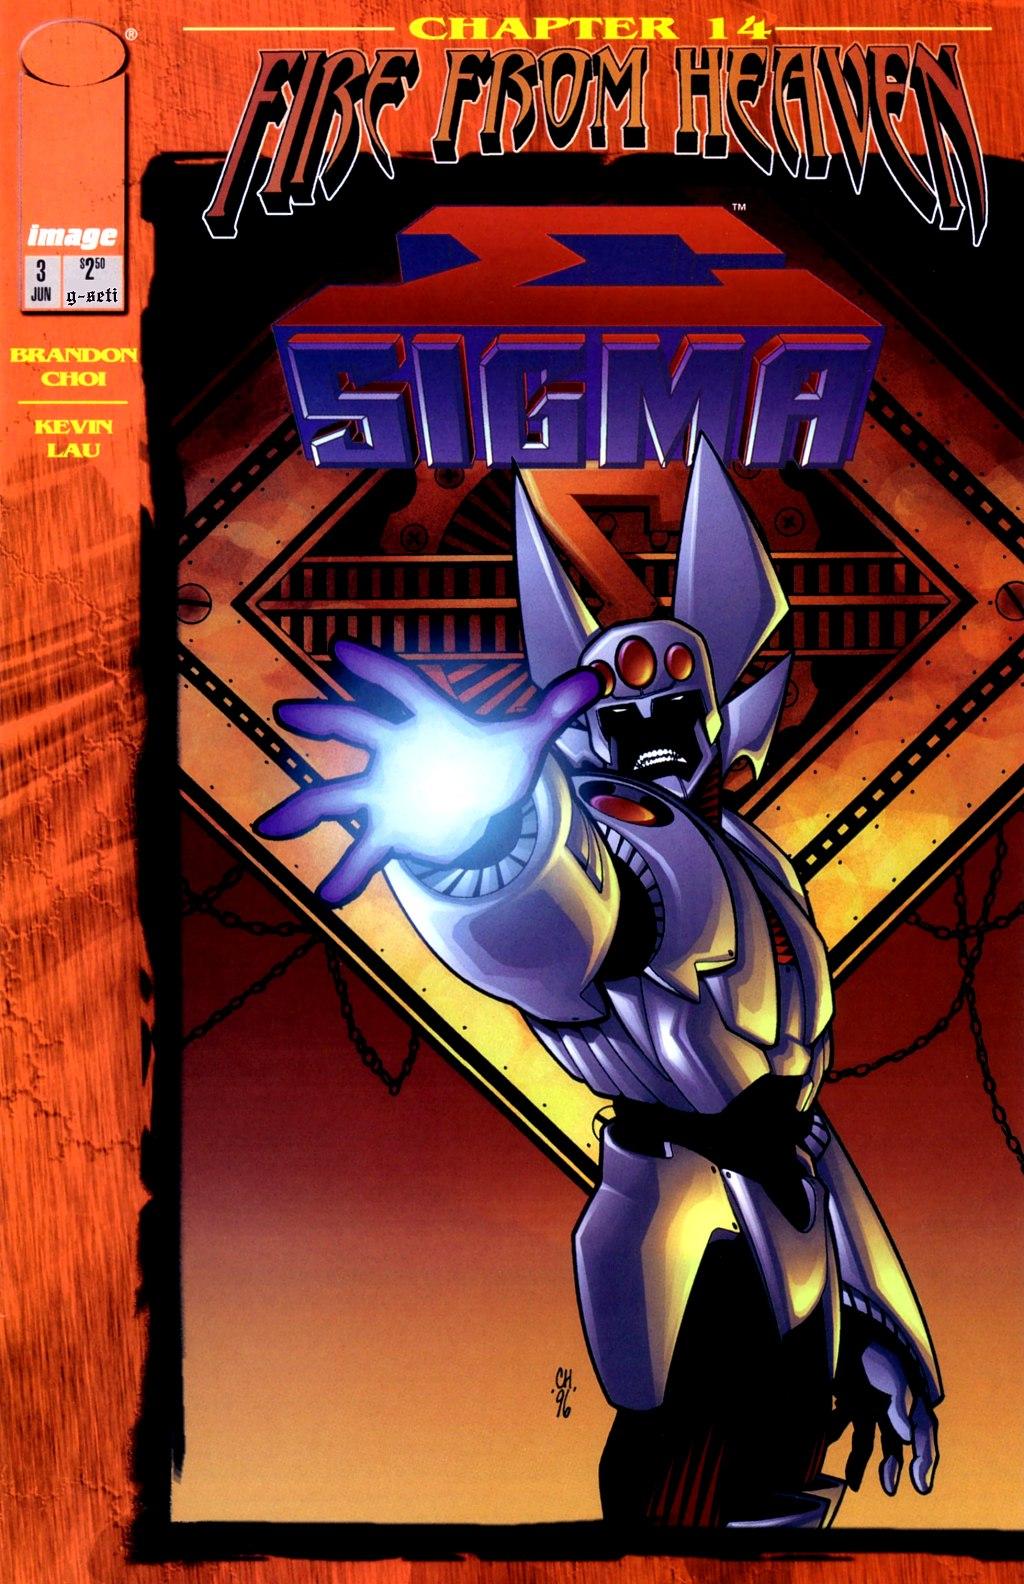 Sigma Vol. 1 #3